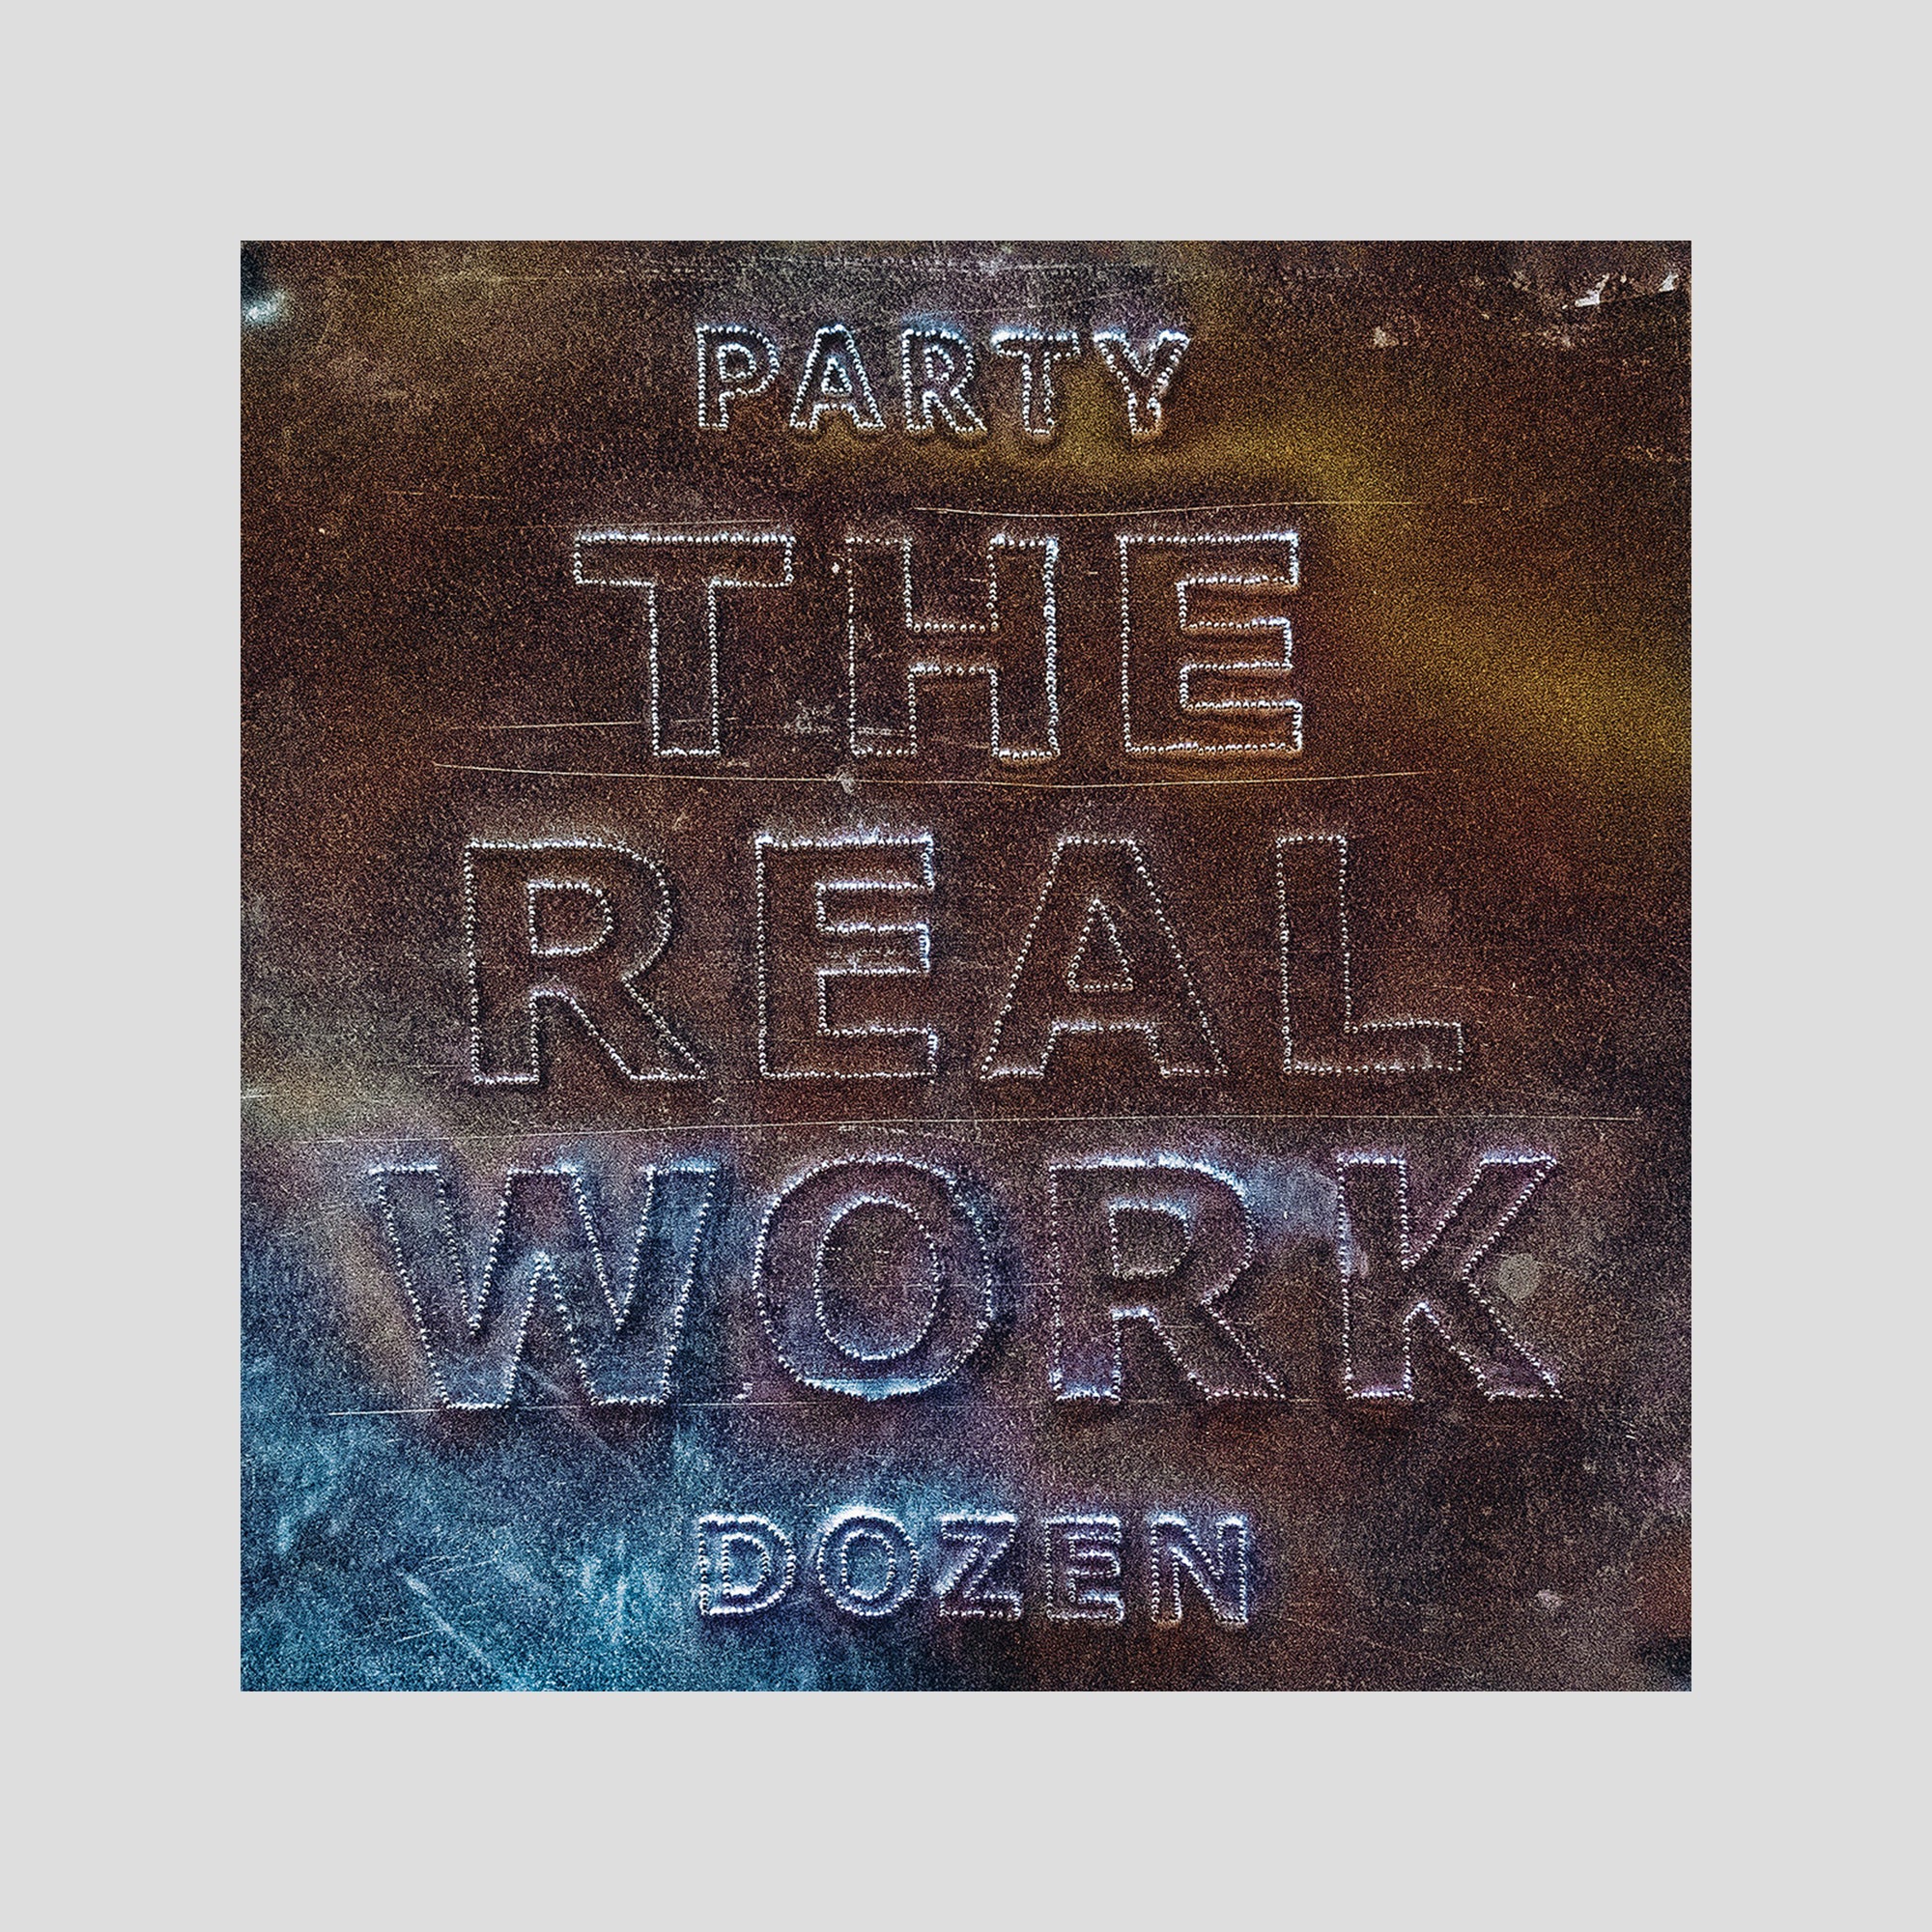 PARTY DOZEN "THE REAL WORK" LP